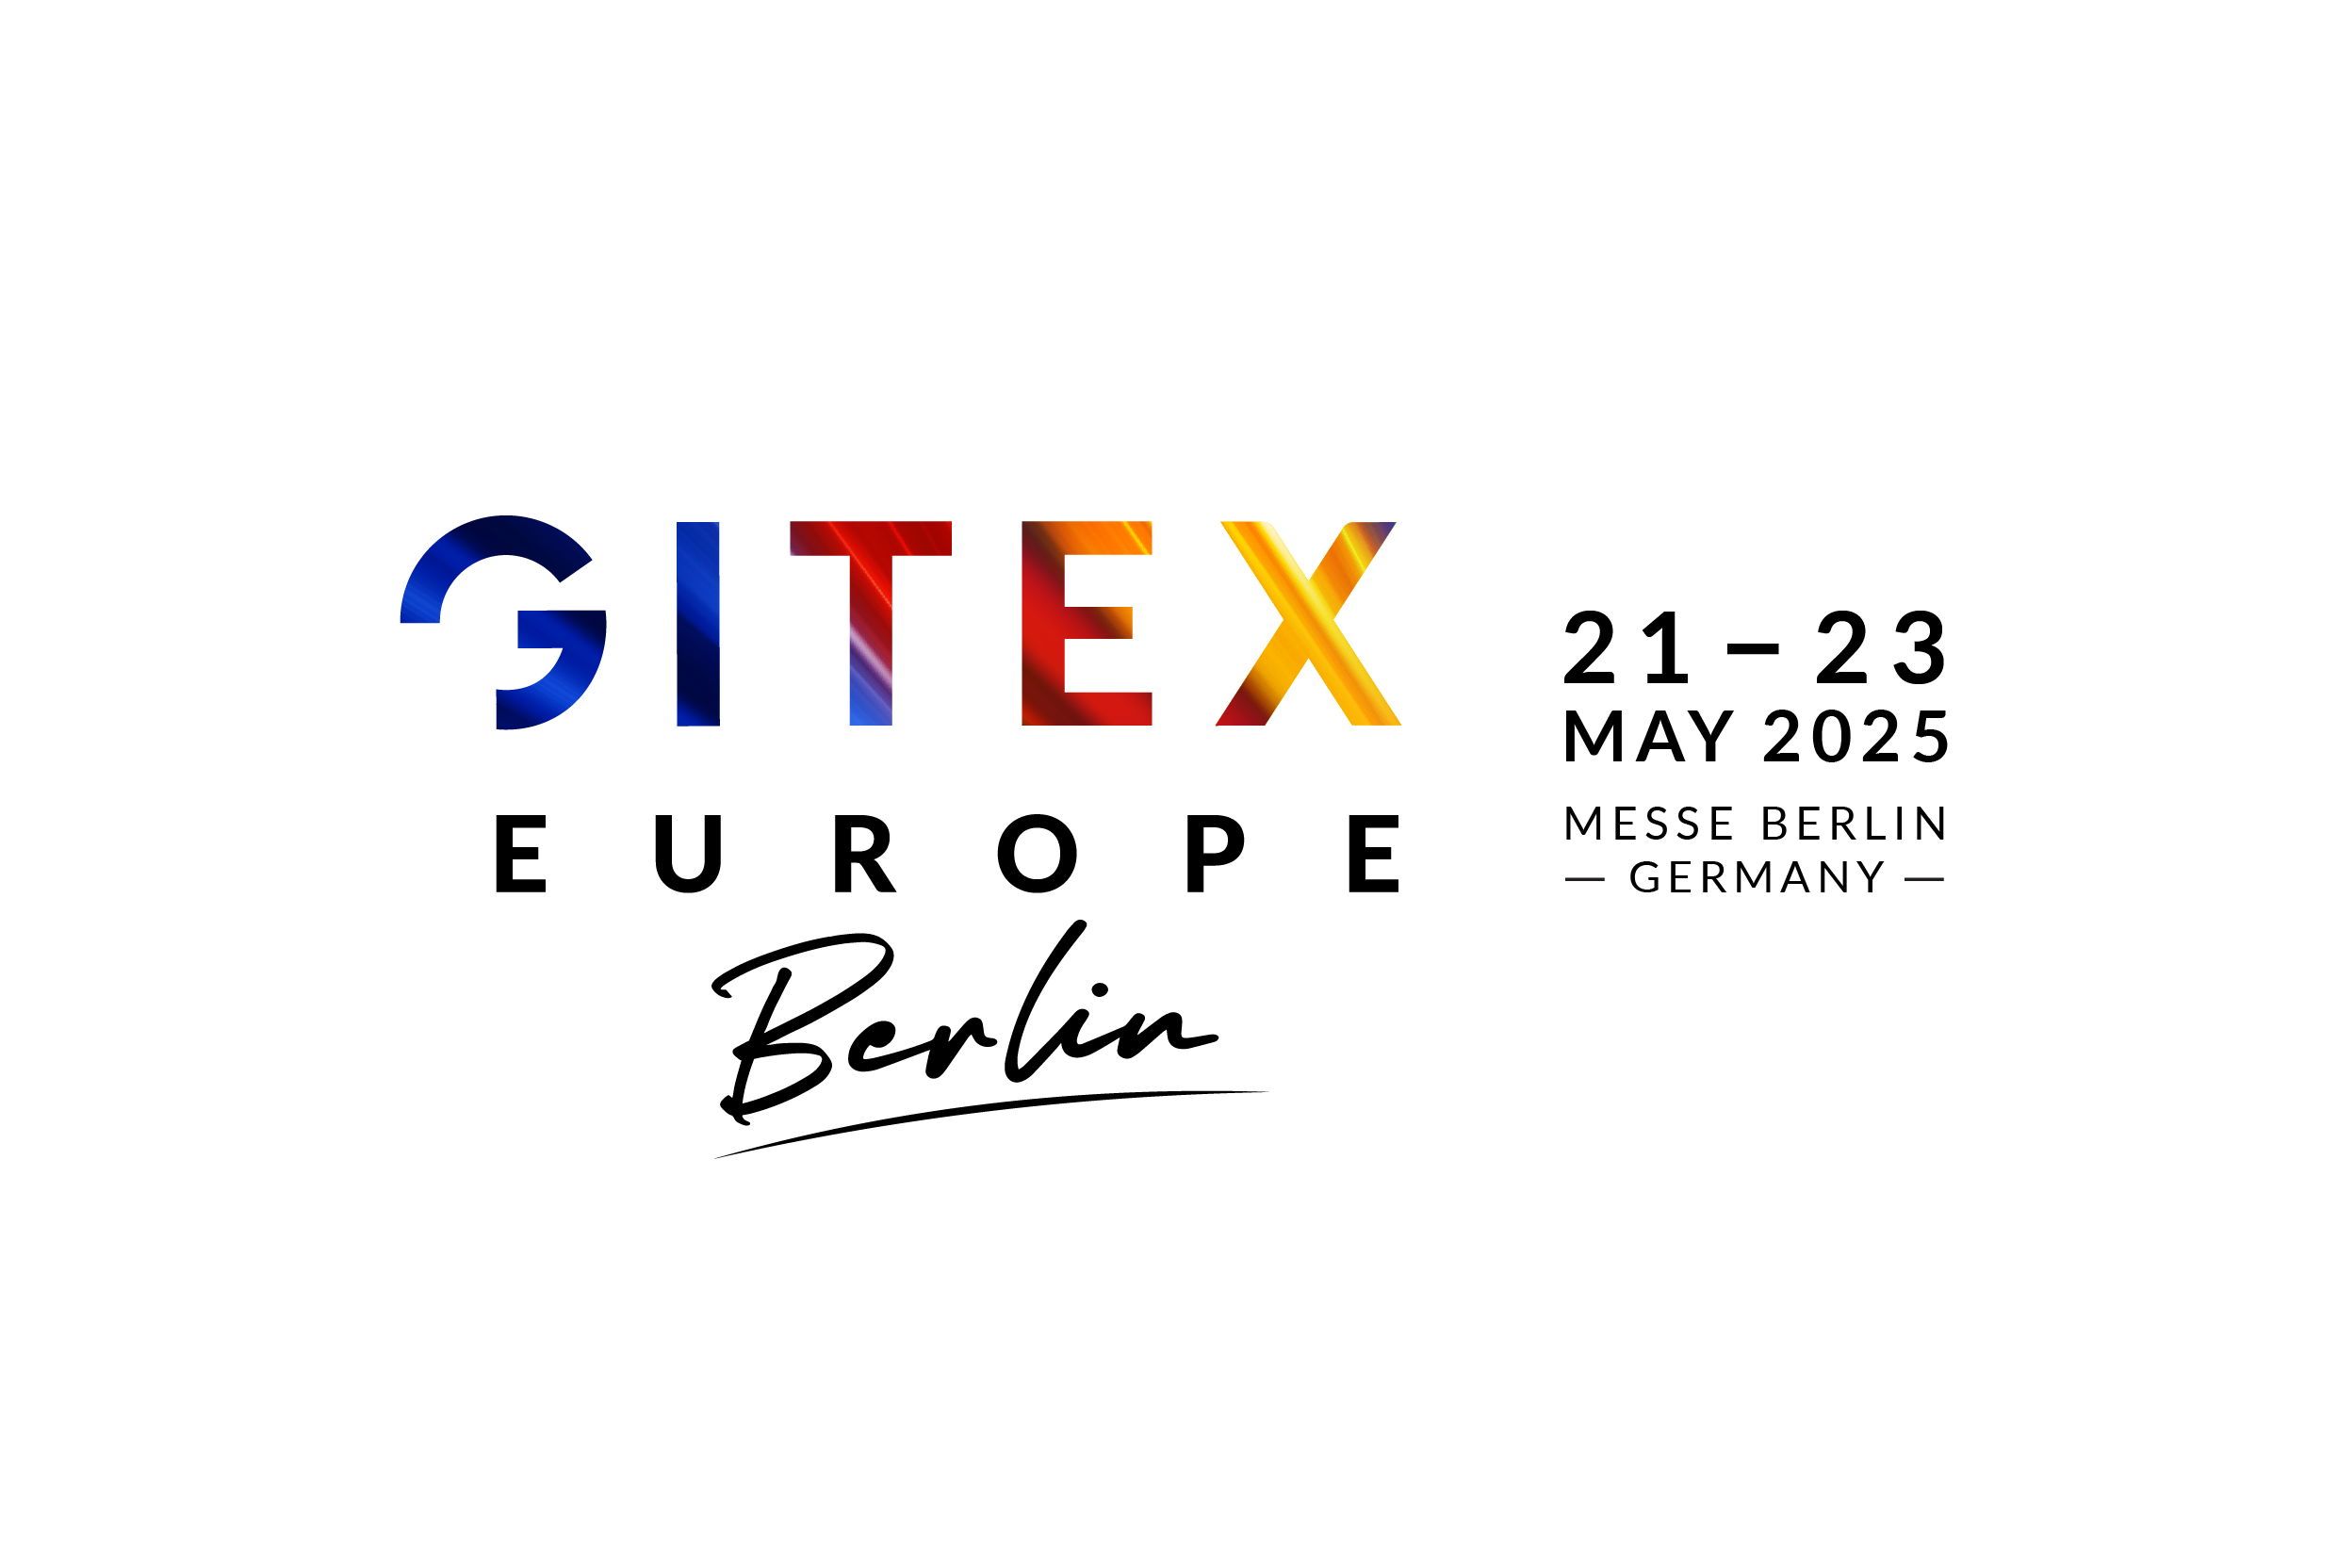 GITEX_EUROPE with Dates Color Horizontal_logo